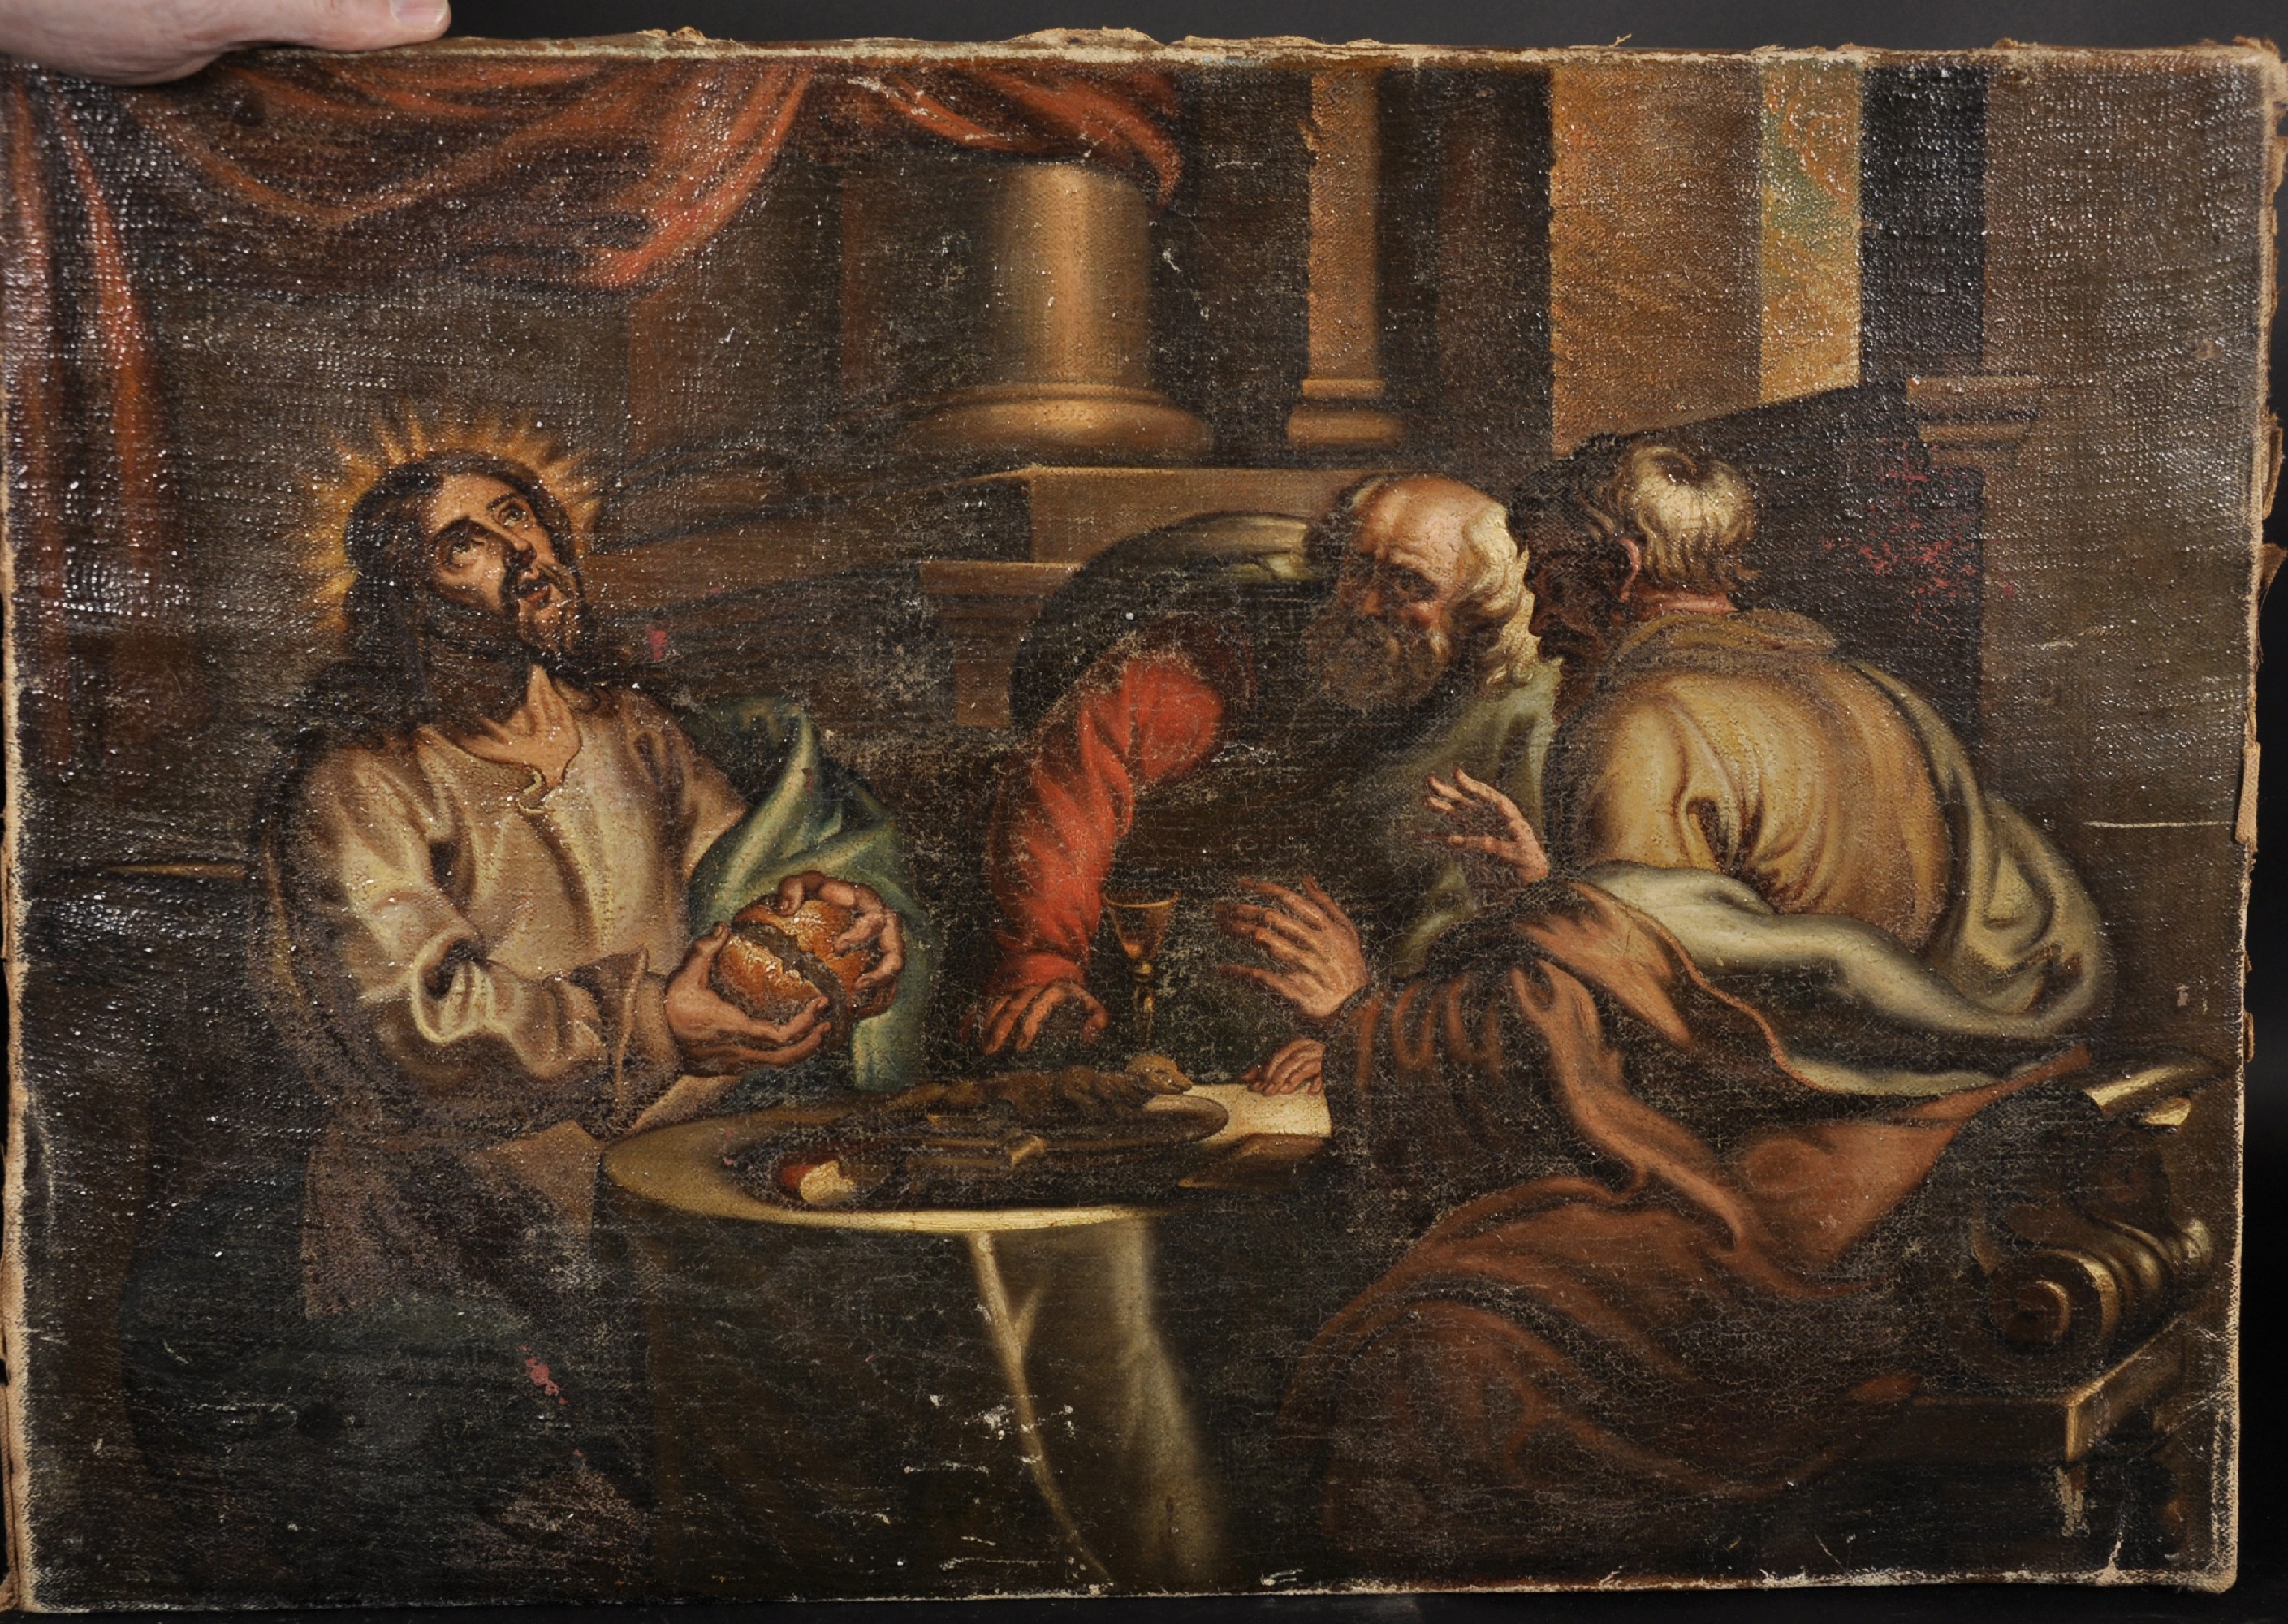 18th Century Italian School. Christ Breaking the Bread, Oil on Canvas, Unframed, 18.5" x 25.5". - Image 2 of 3